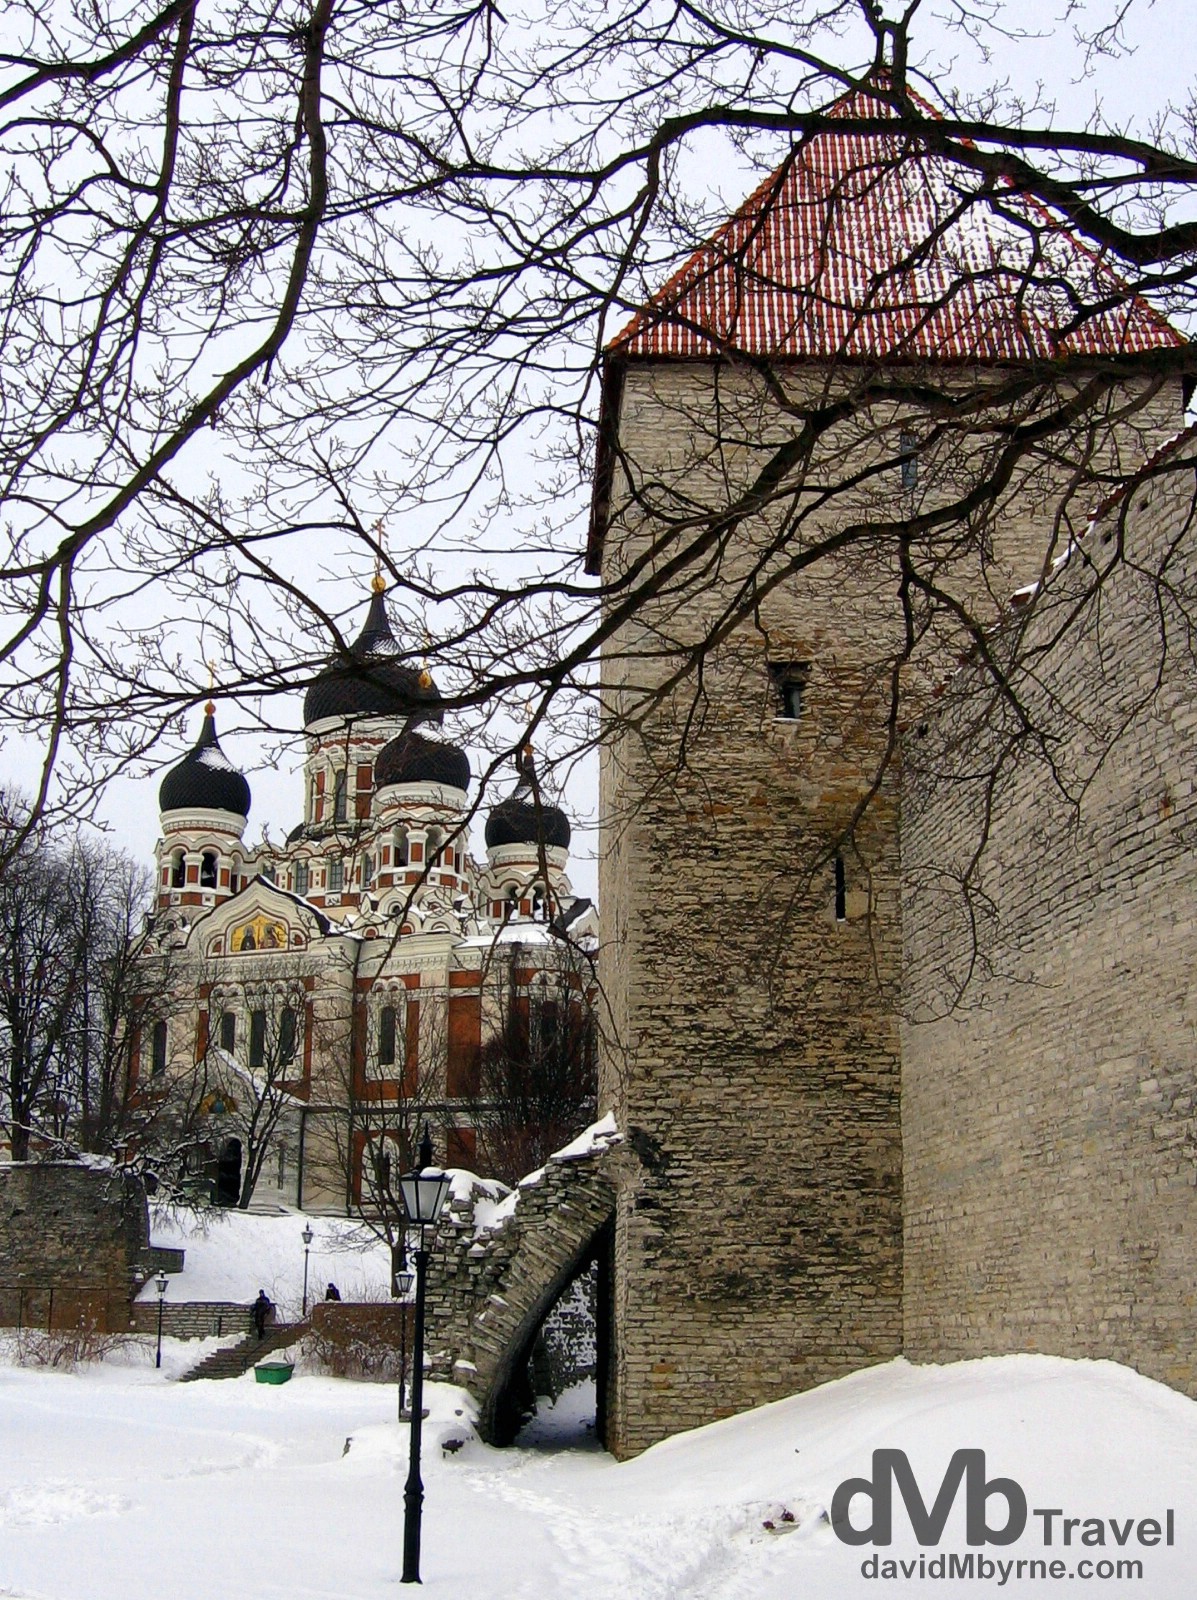 A wintry Old Town in Tallinn, Estonia. March 2, 2006. 